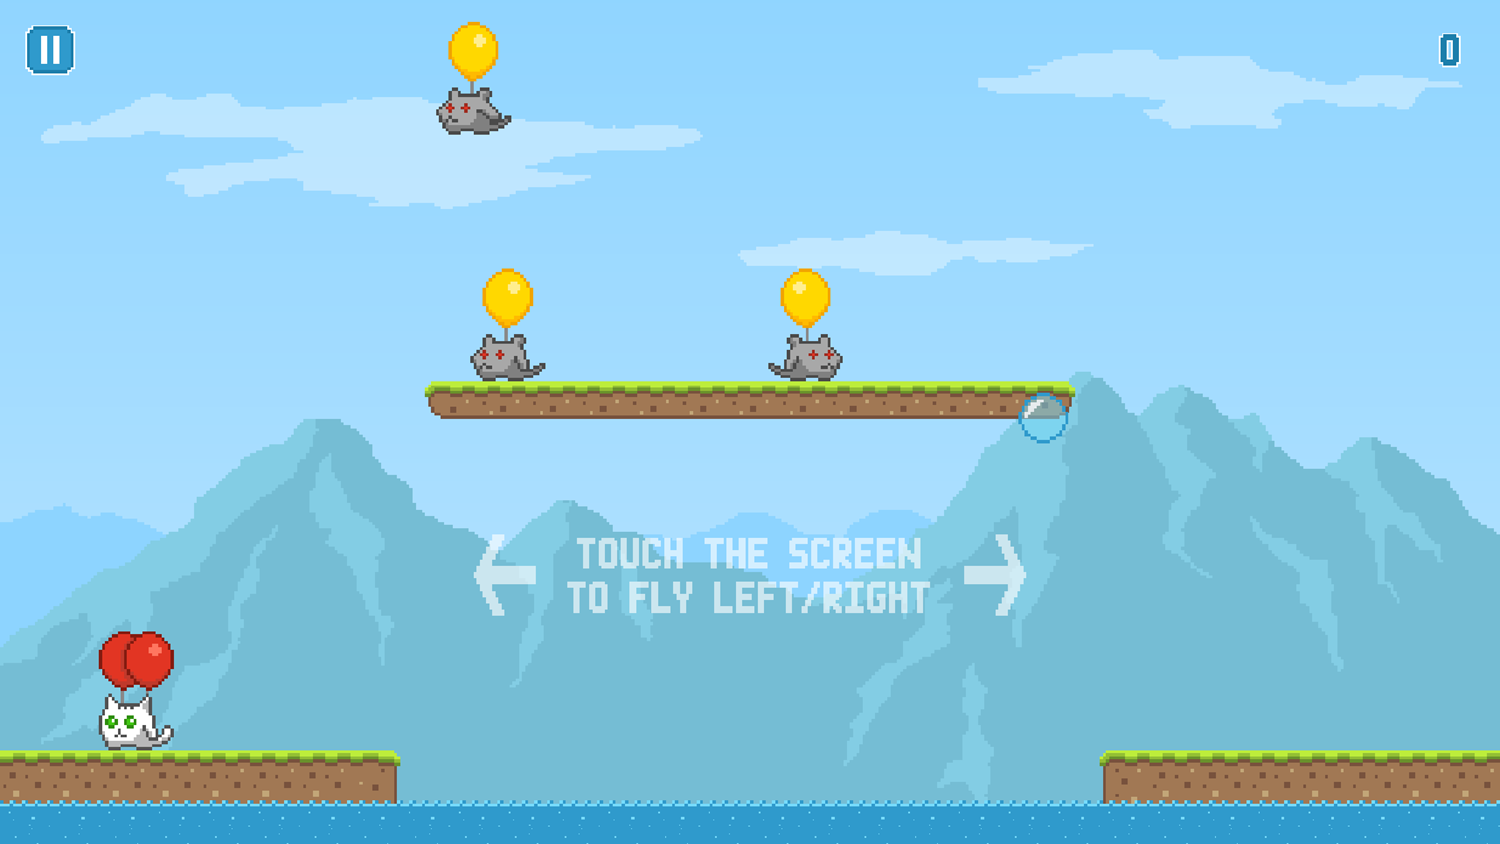 Balloon Fight Game Level Start Screenshot.